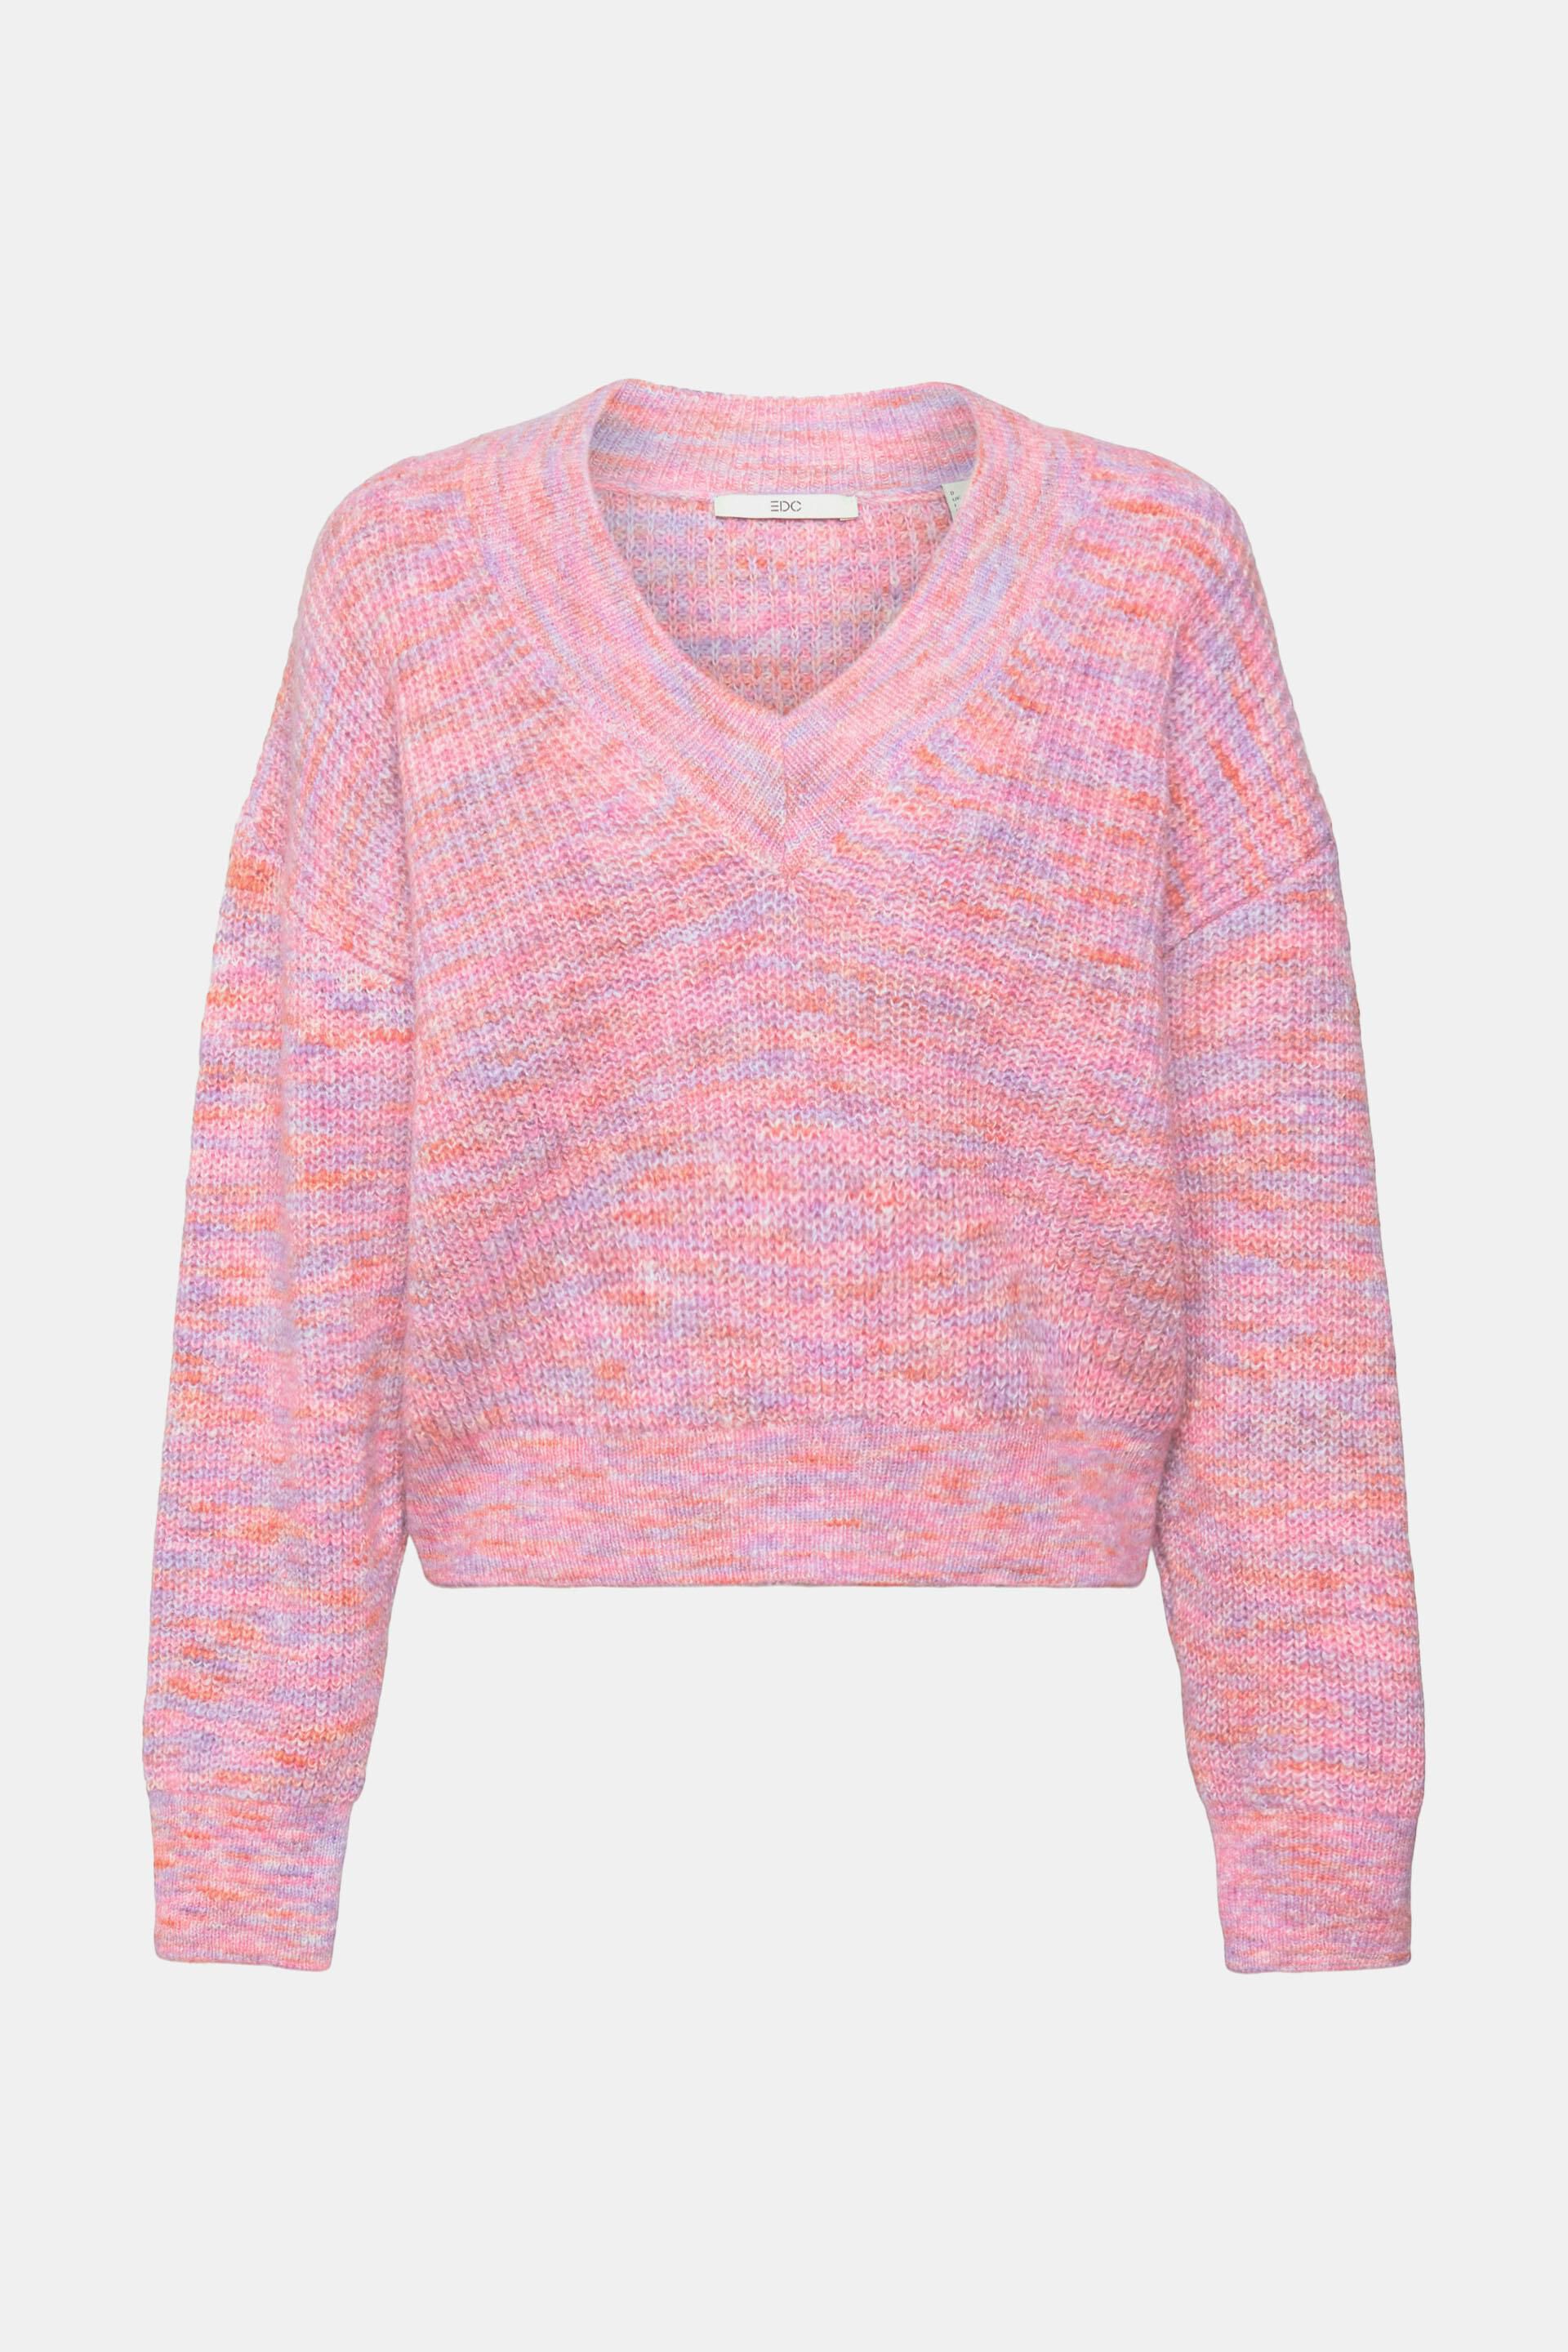 H&M Grof gebreide trui roze elegant Mode Sweaters Grof gebreide truien 